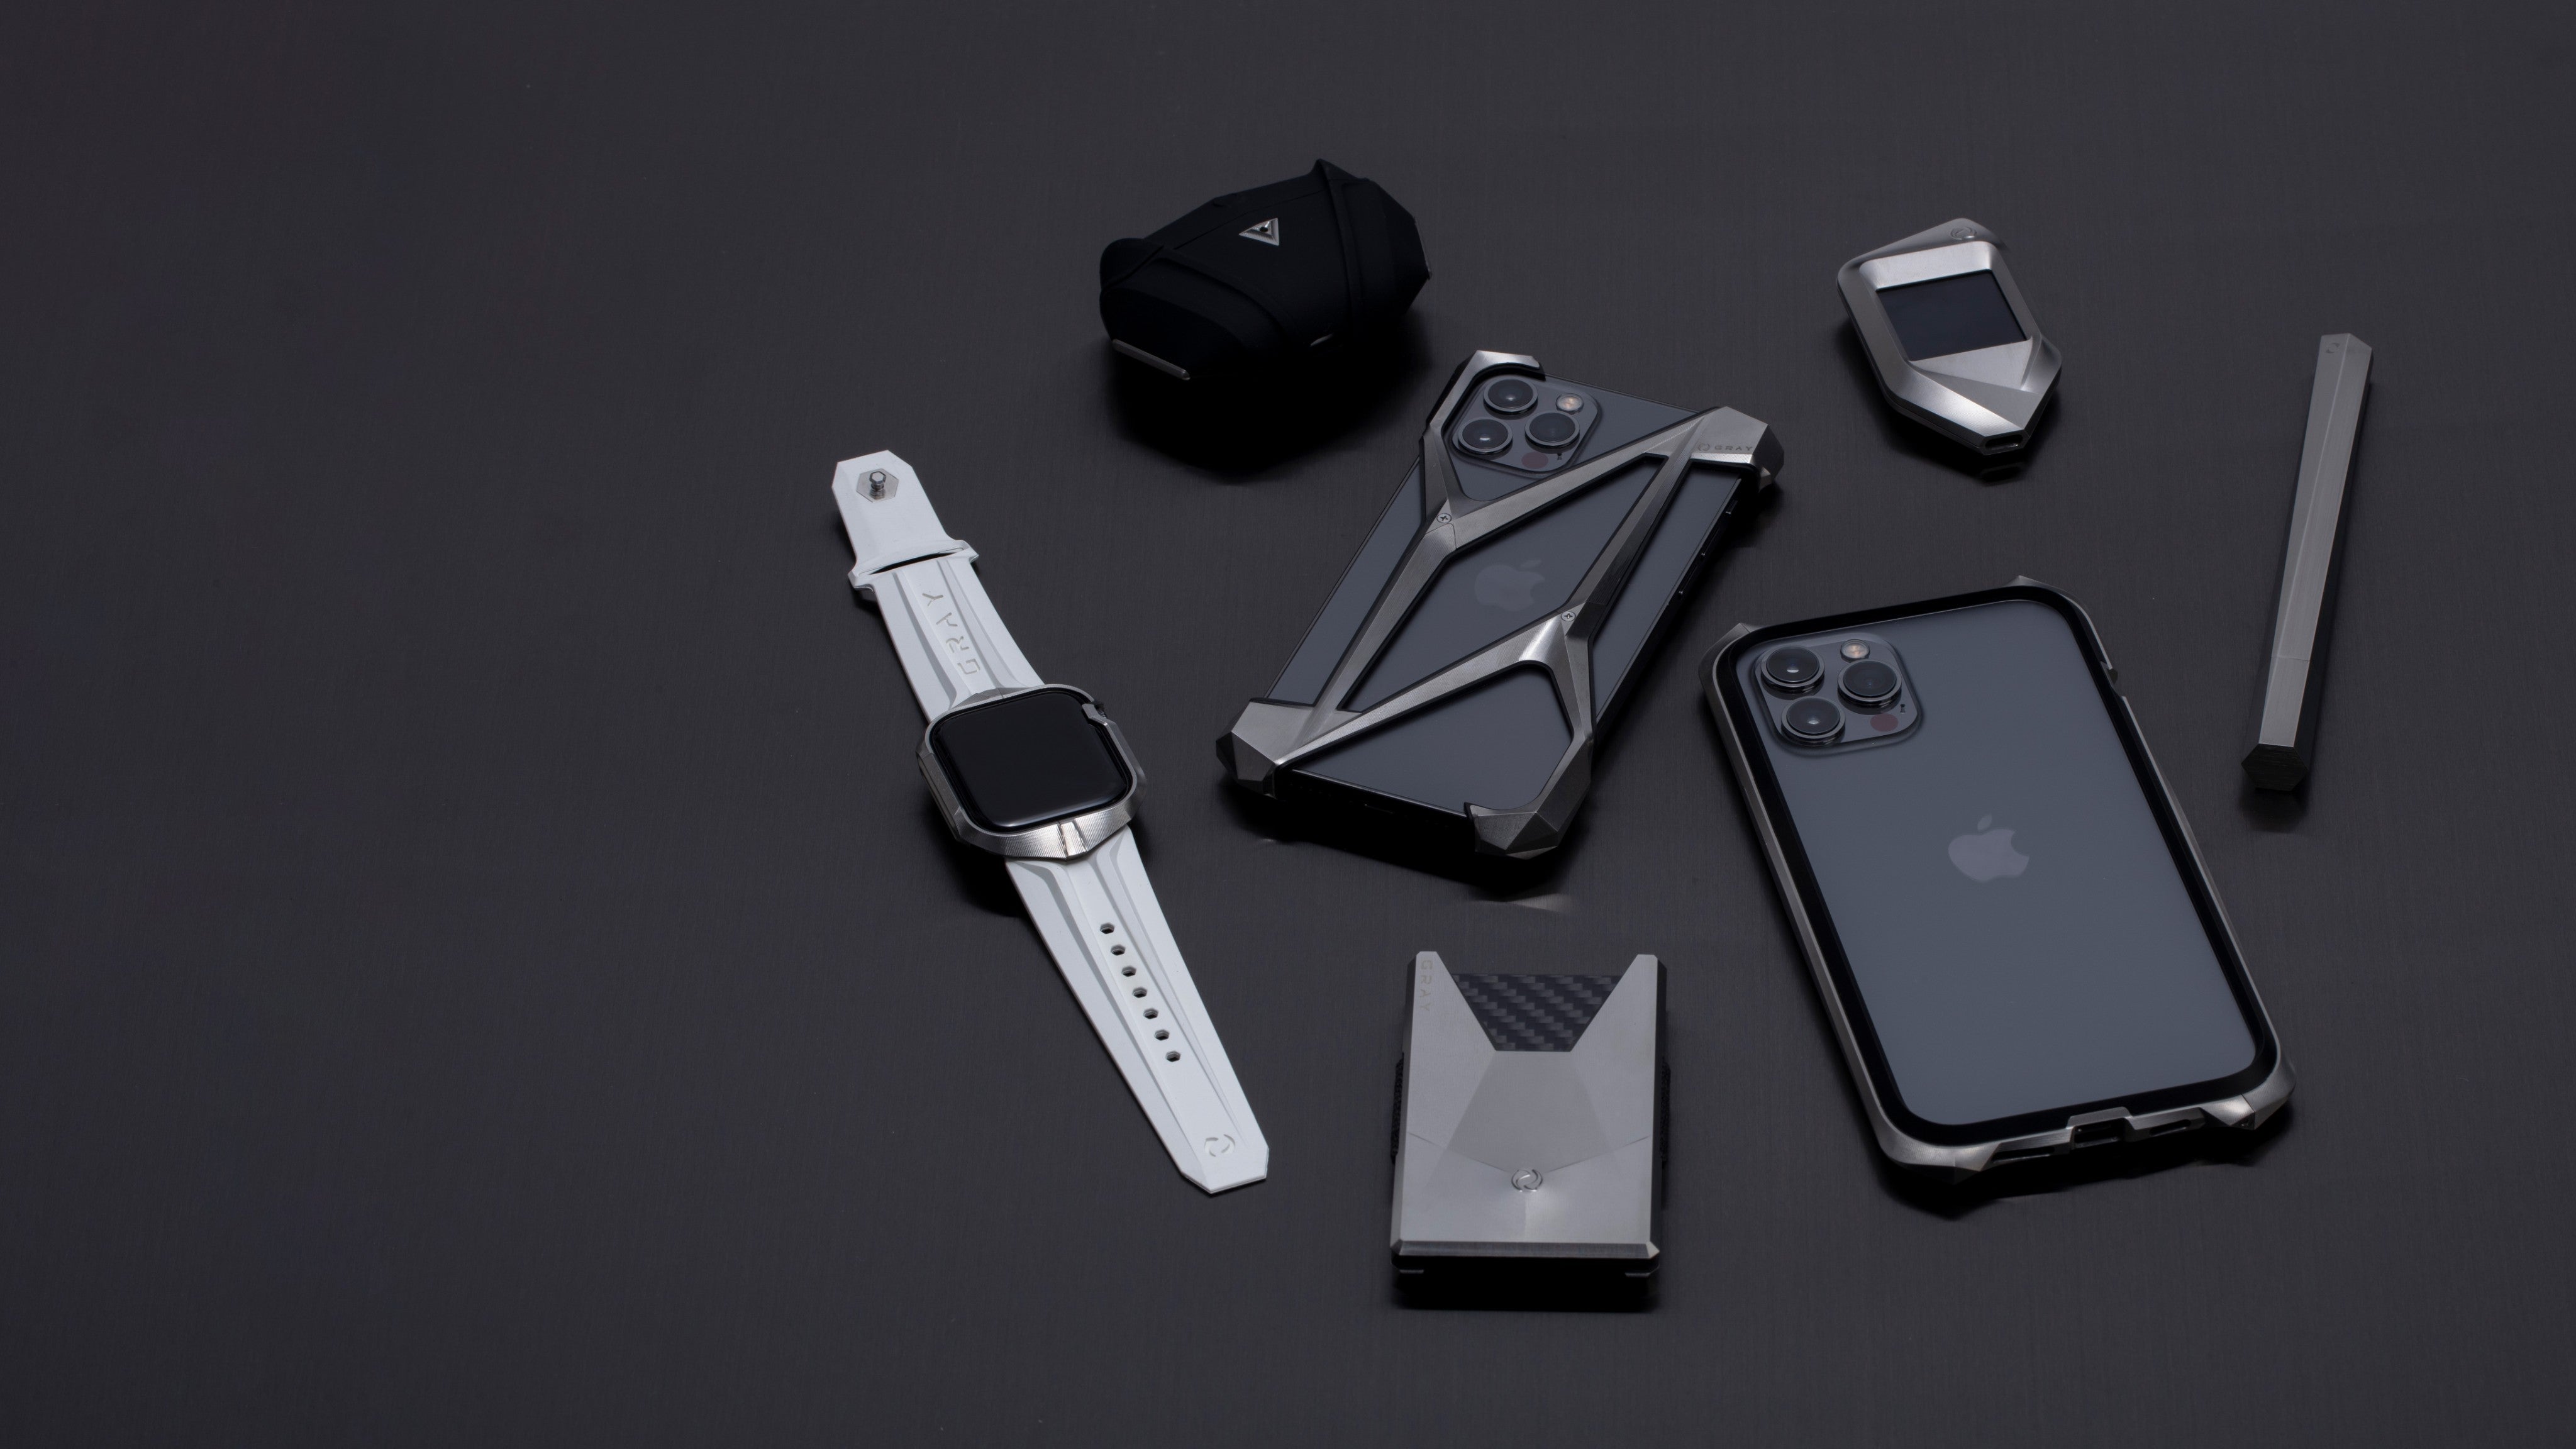 Luxury and Designer iPhone 12 Pro Max Metal Case - GRAY®